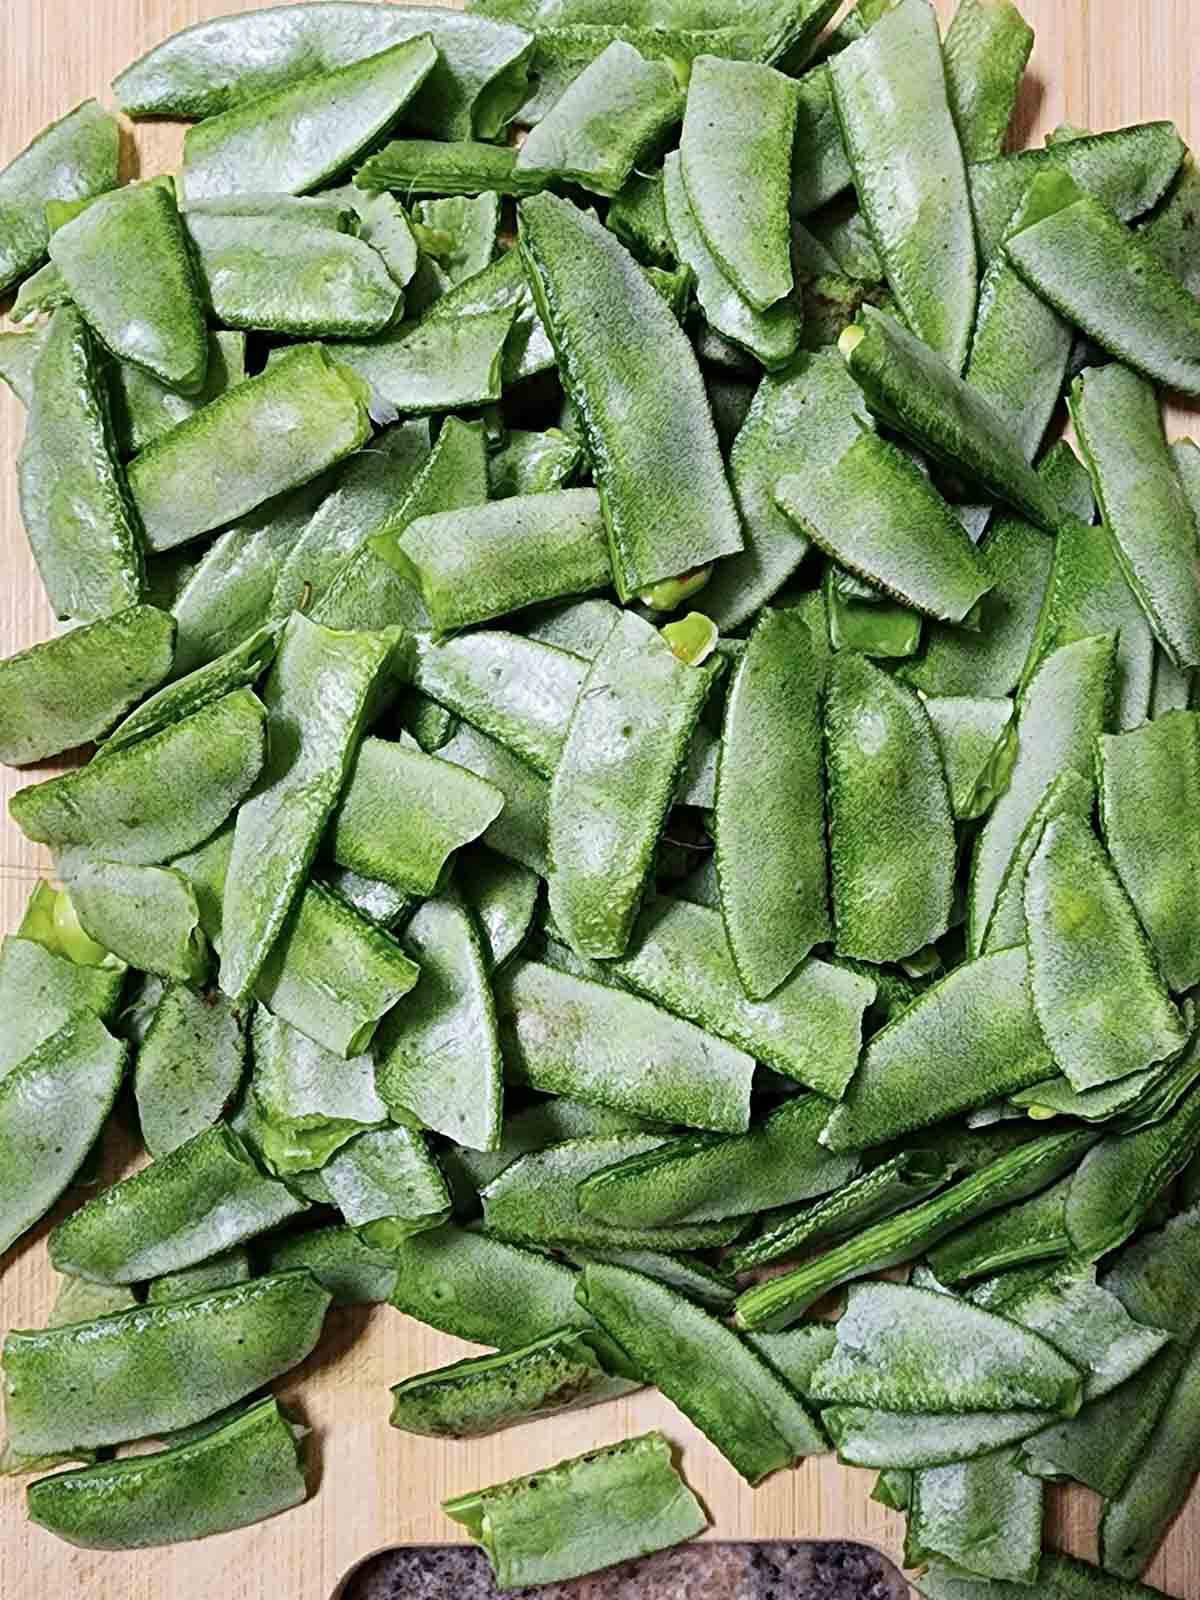 Chopped the papdi, surti papdi, val papdi or flat green beans.